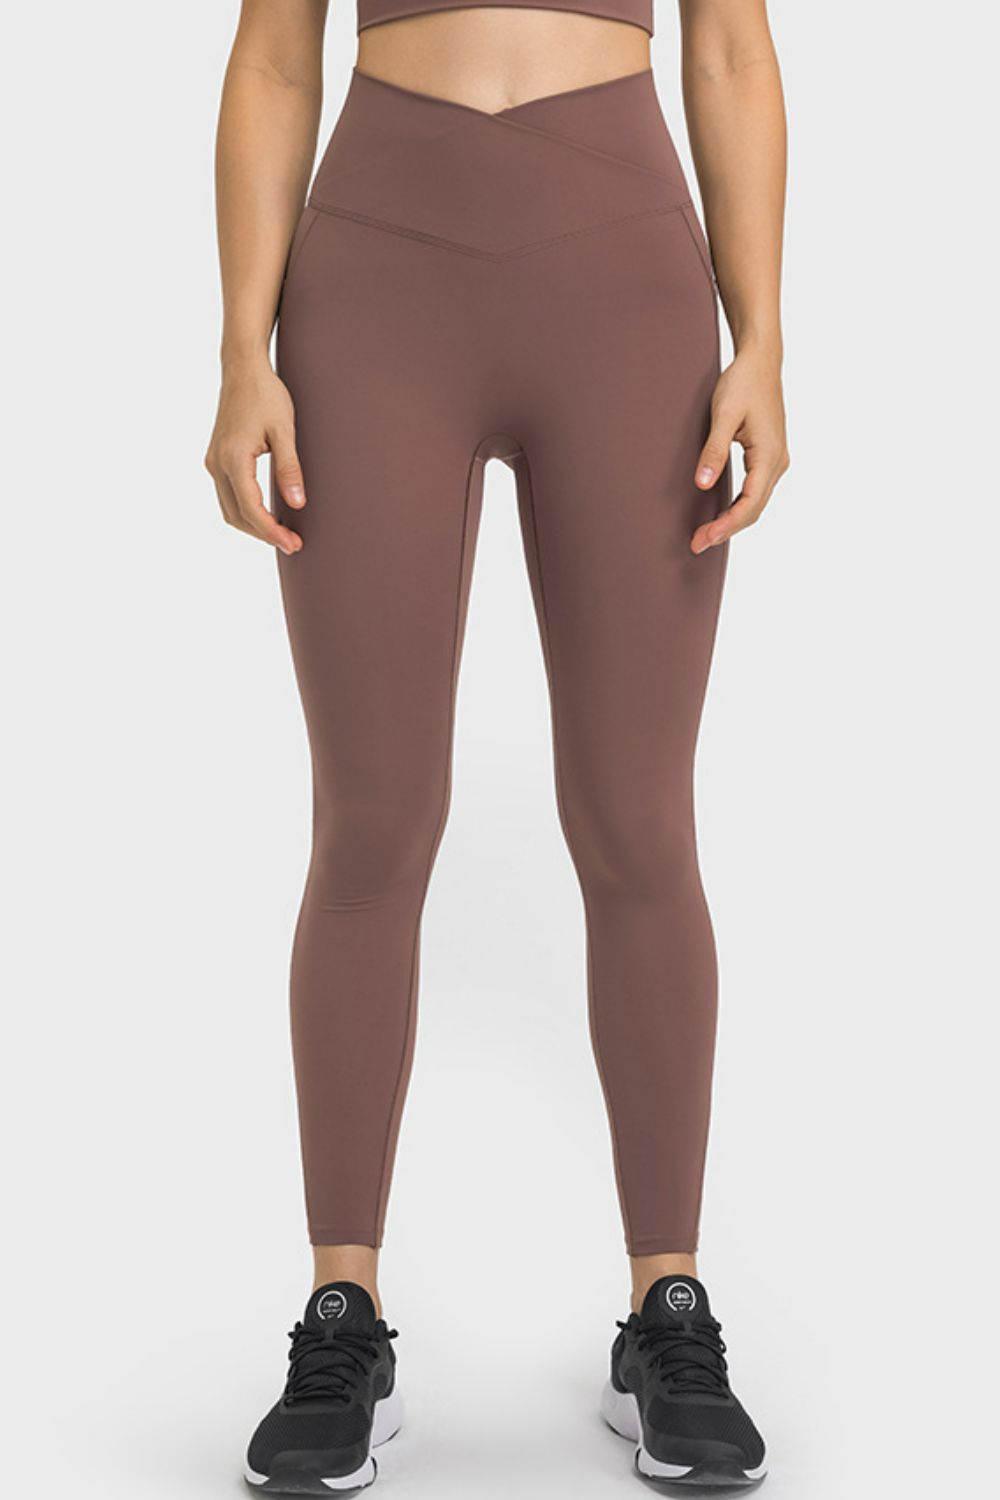 V-Waist Yoga Leggings with Pockets Print on any thing USA/STOD clothes